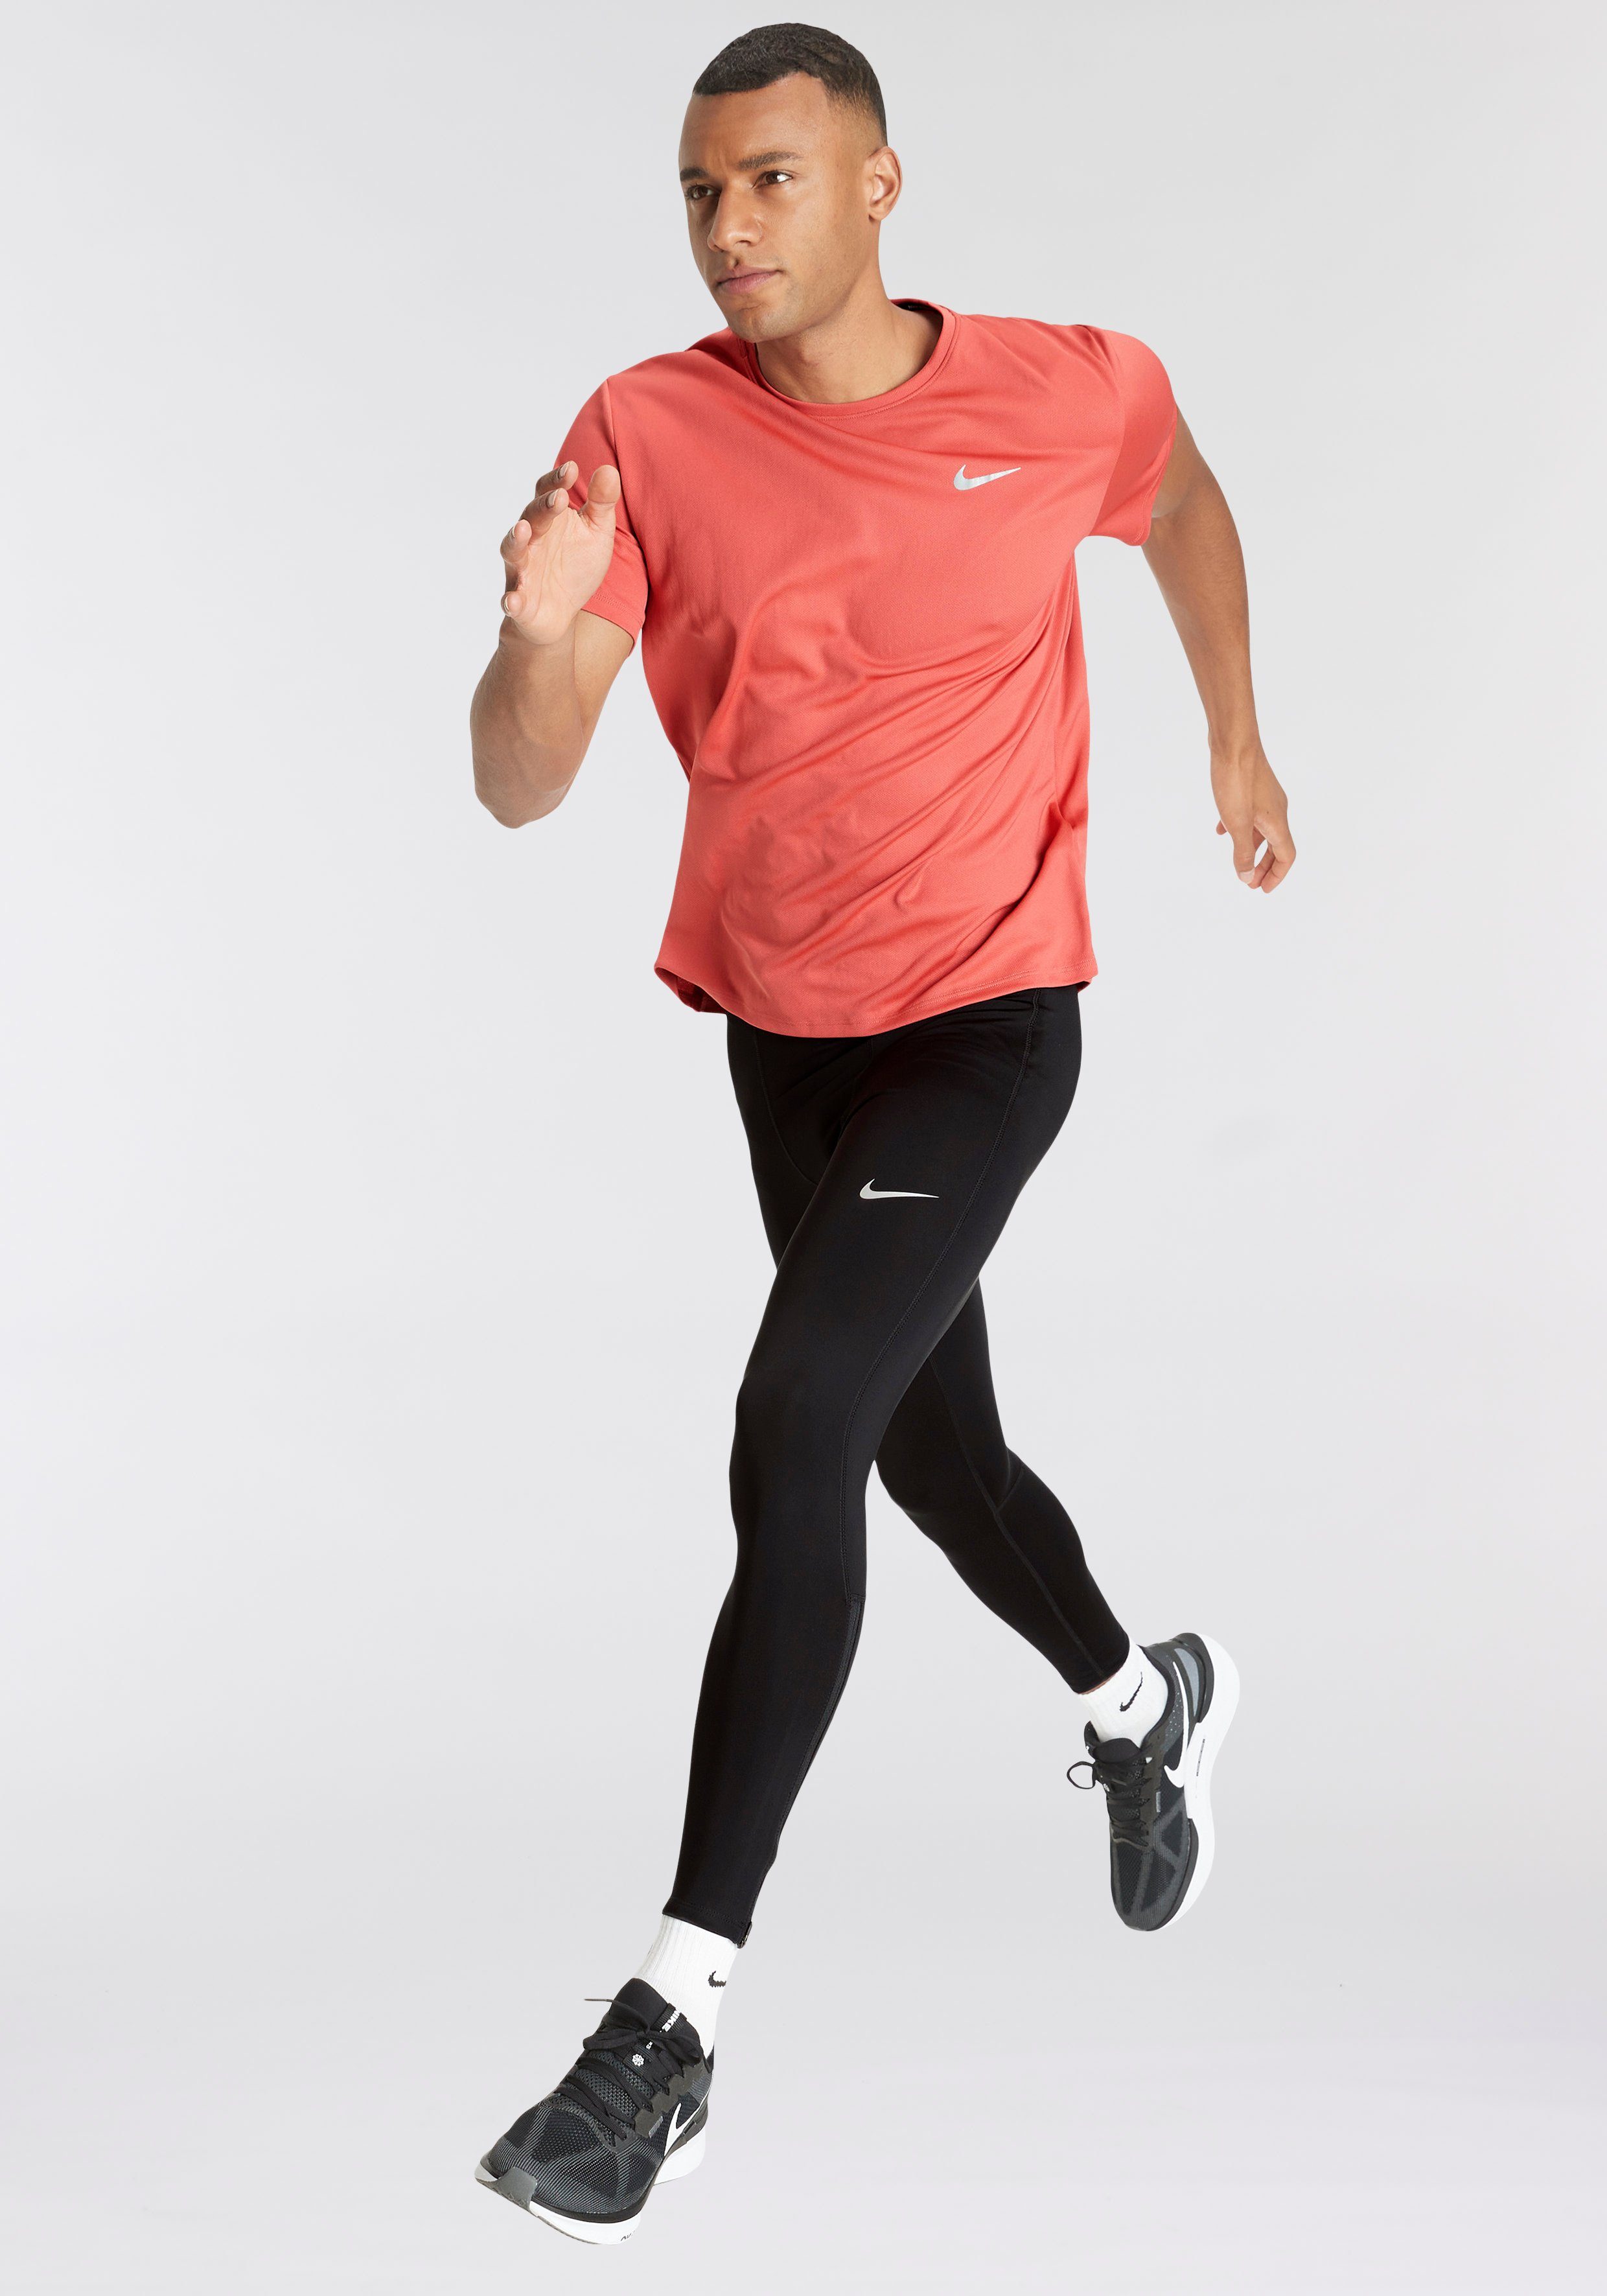 UV ADOBE/REFLECTIVE TOP SILV MEN'S Laufshirt RUNNING SHORT-SLEEVE MILER Nike DRI-FIT